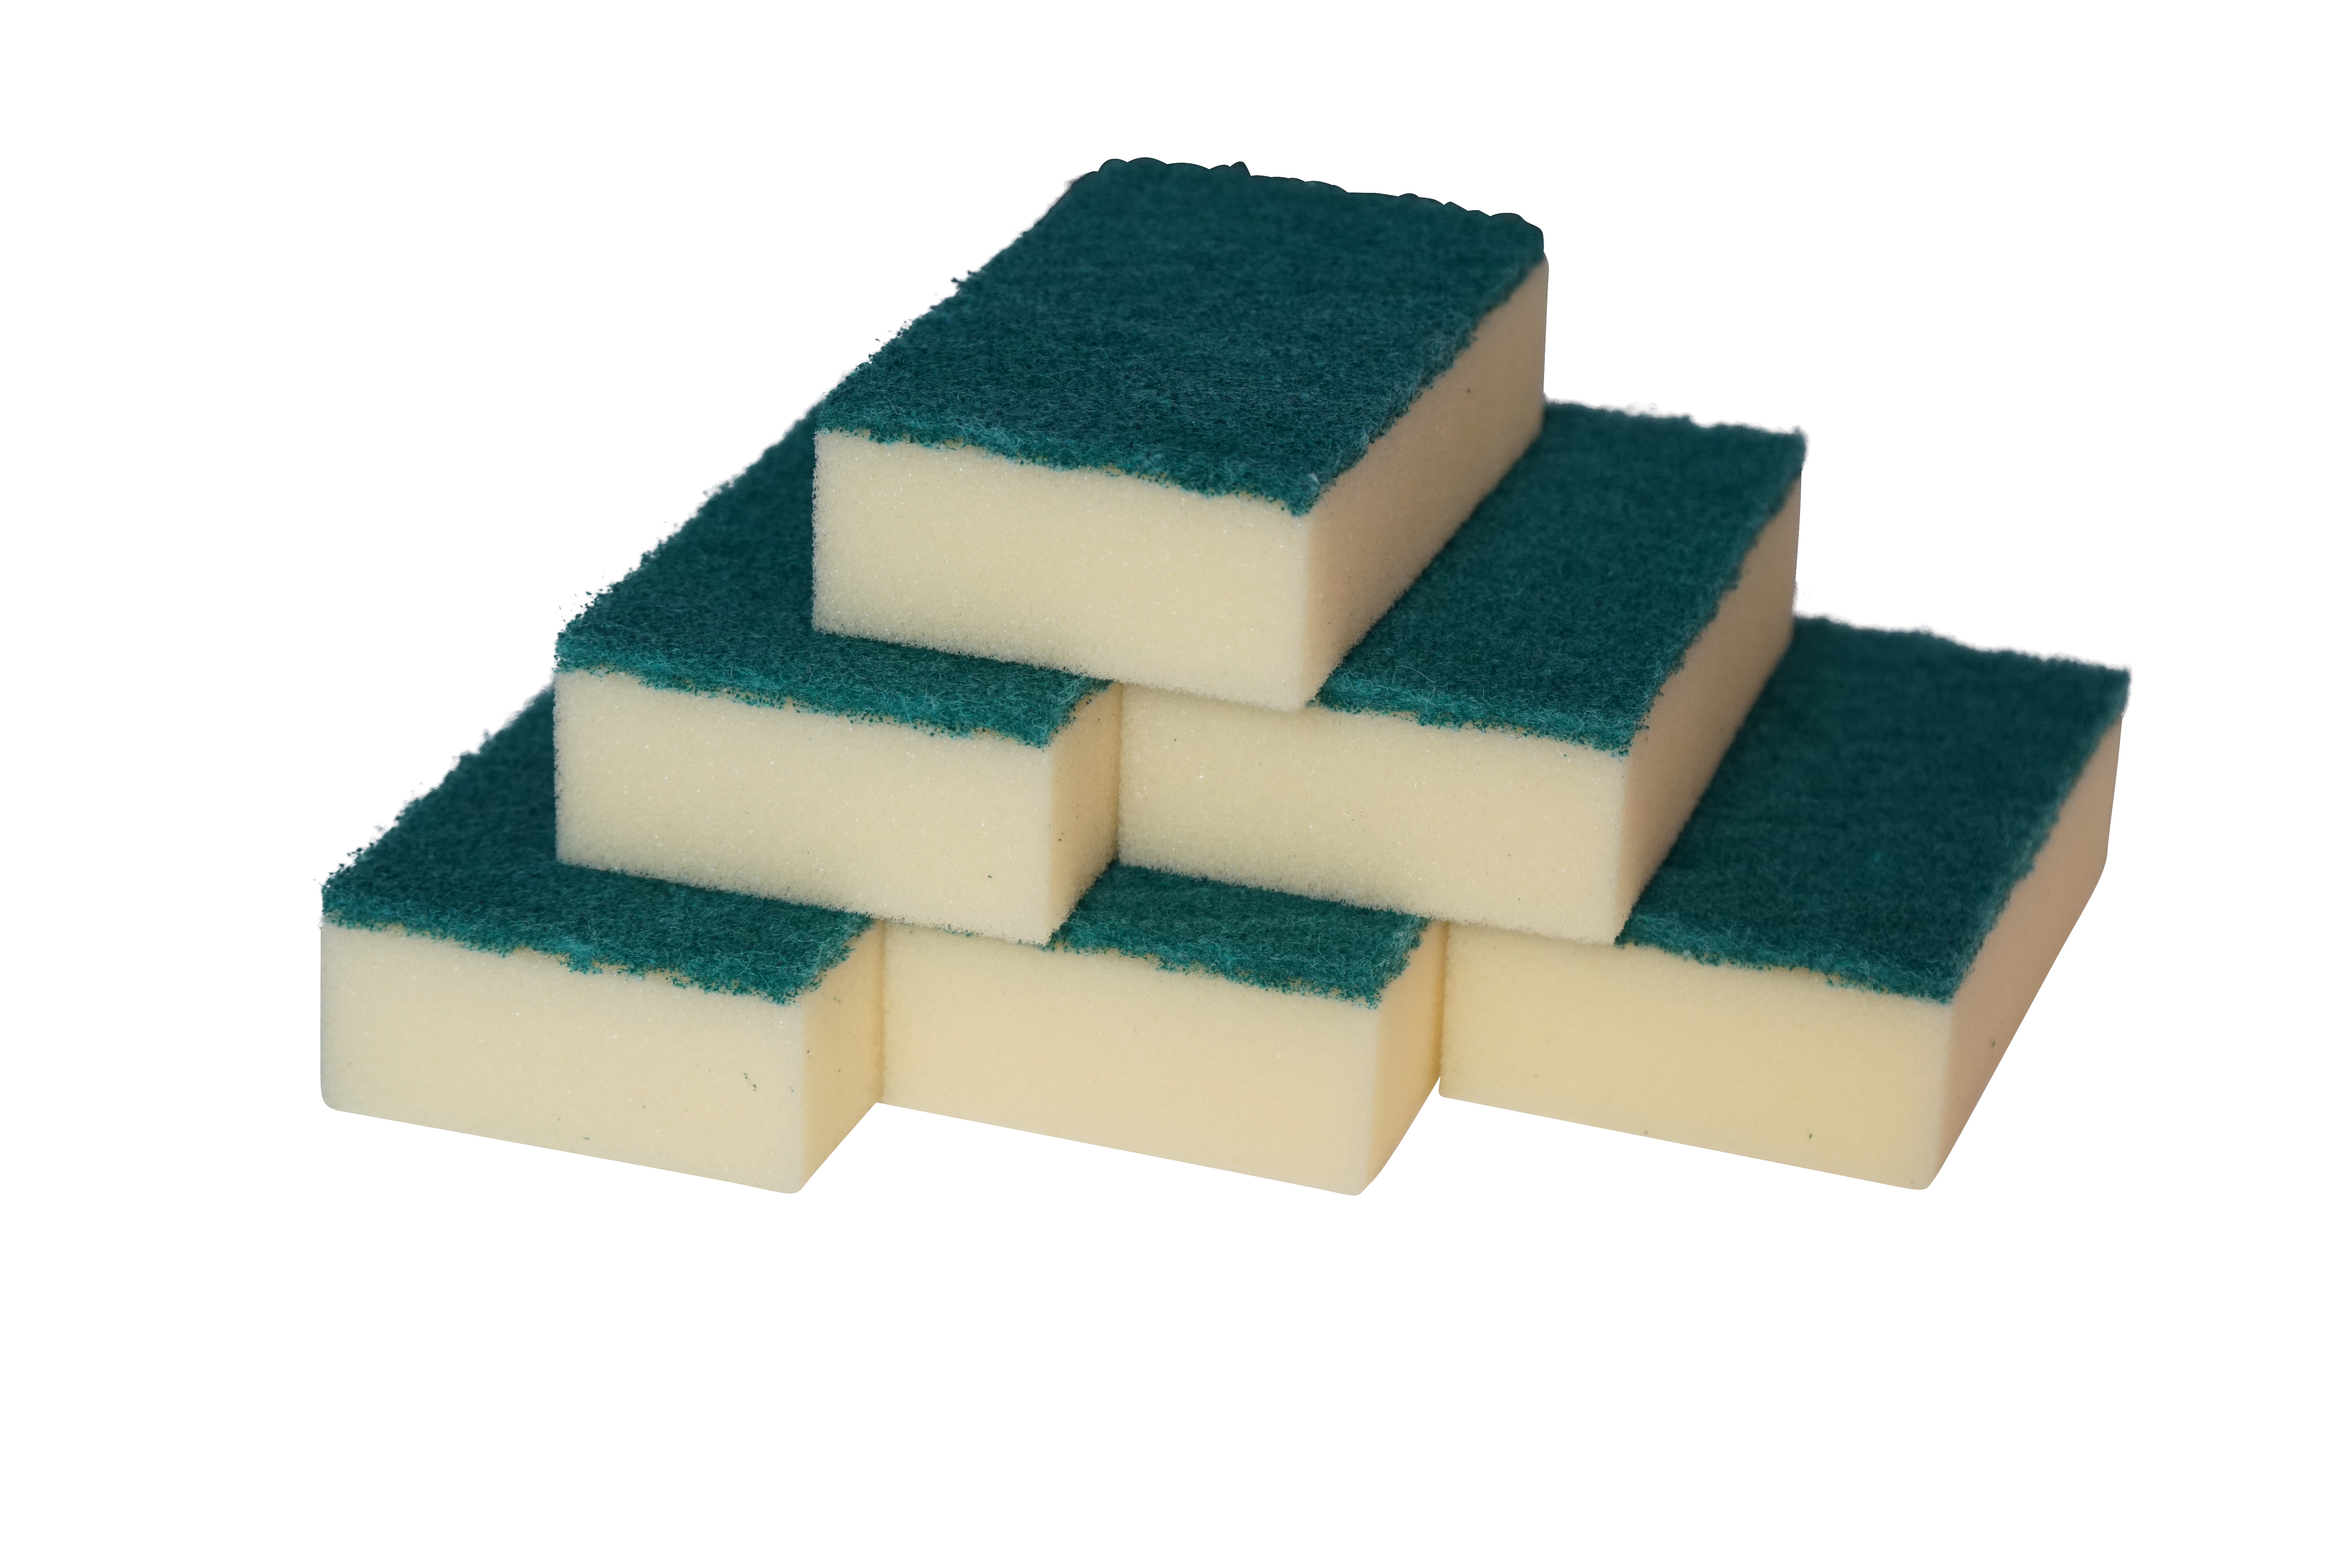 Large (4" x 6") Sponge Scourers (Pack of 10)